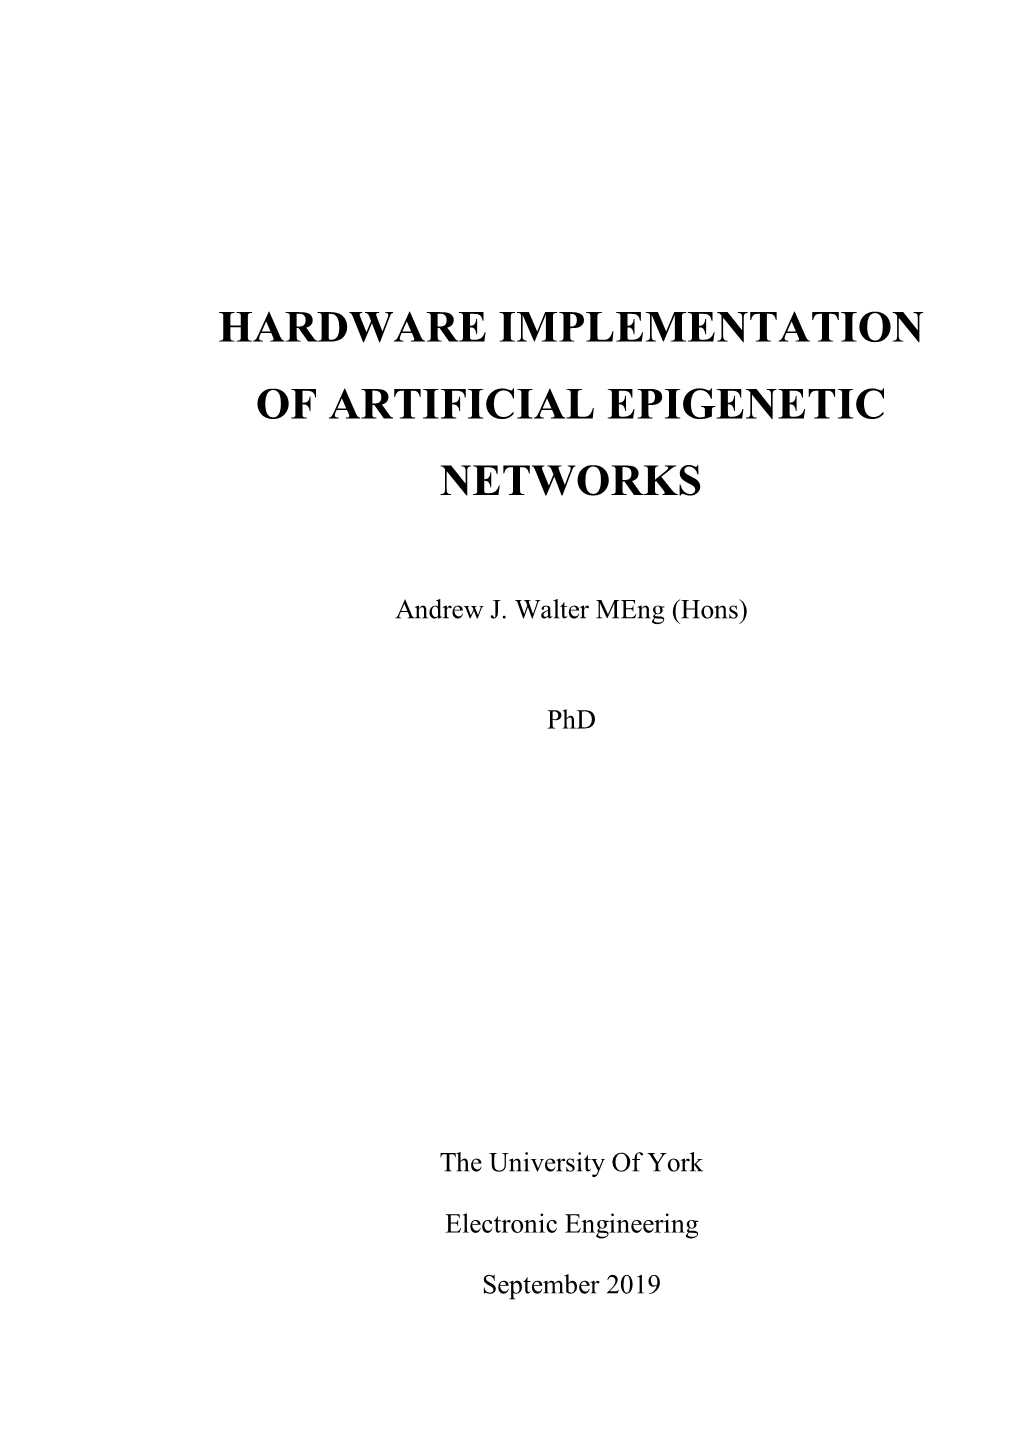 Hardware Implementation of Artificial Epigenetic Networks